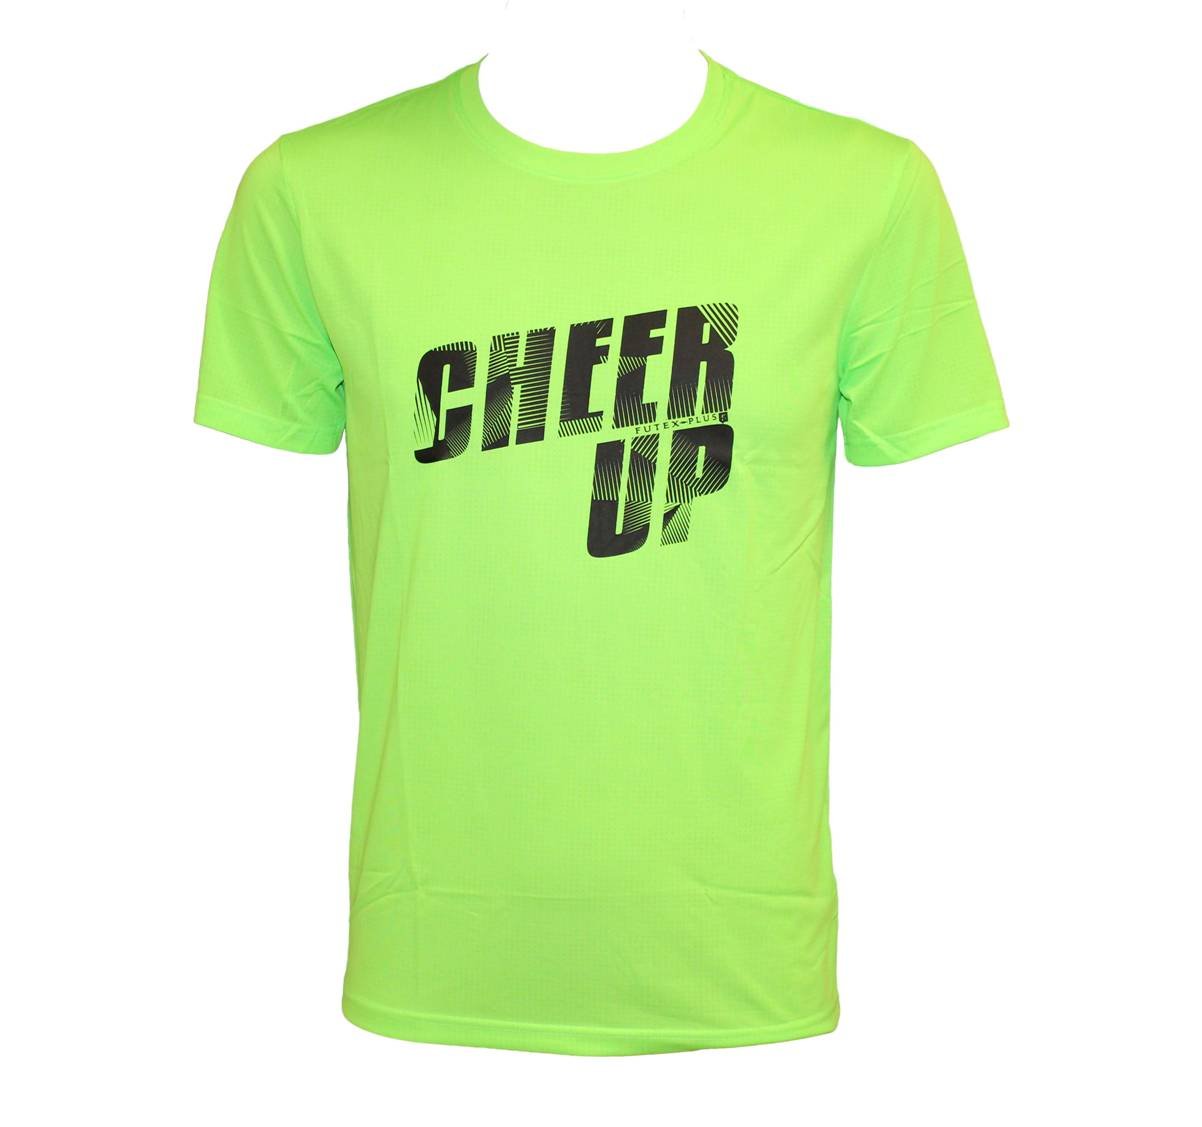 Futex Pro | T-Shirt - Cheer Up - Sports & Games